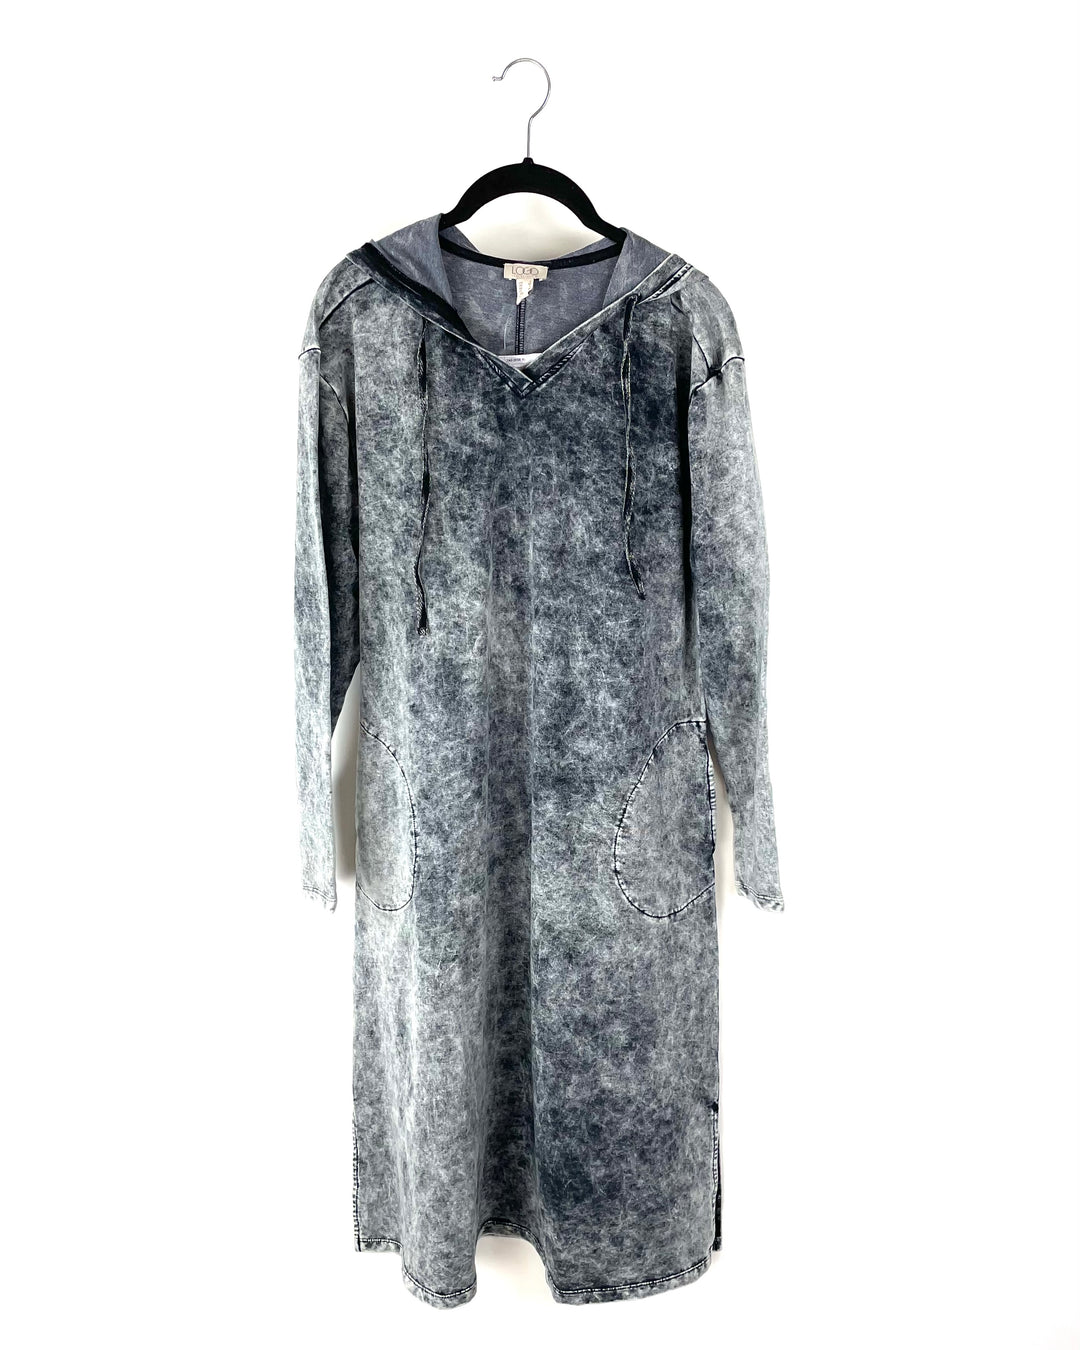 Acid Wash Grey Hooded Dress - Size 6-8